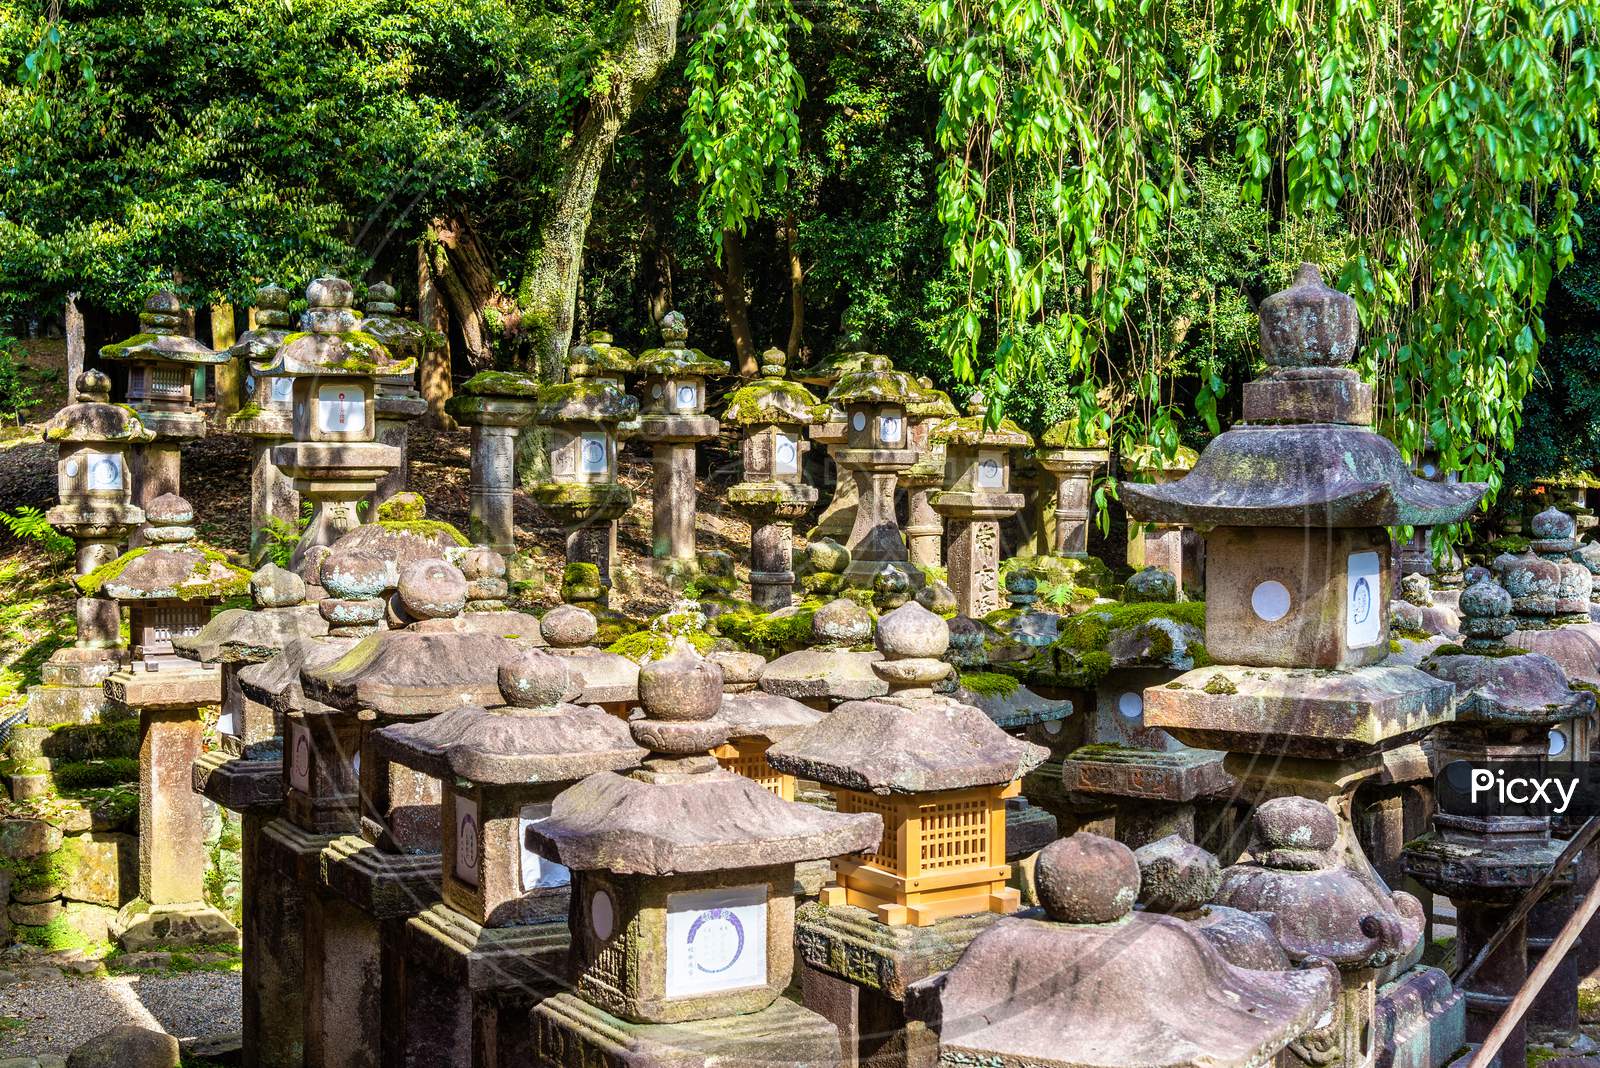 Stone Lanterns At Tamukeyama Hachimangu Shrine In Nara